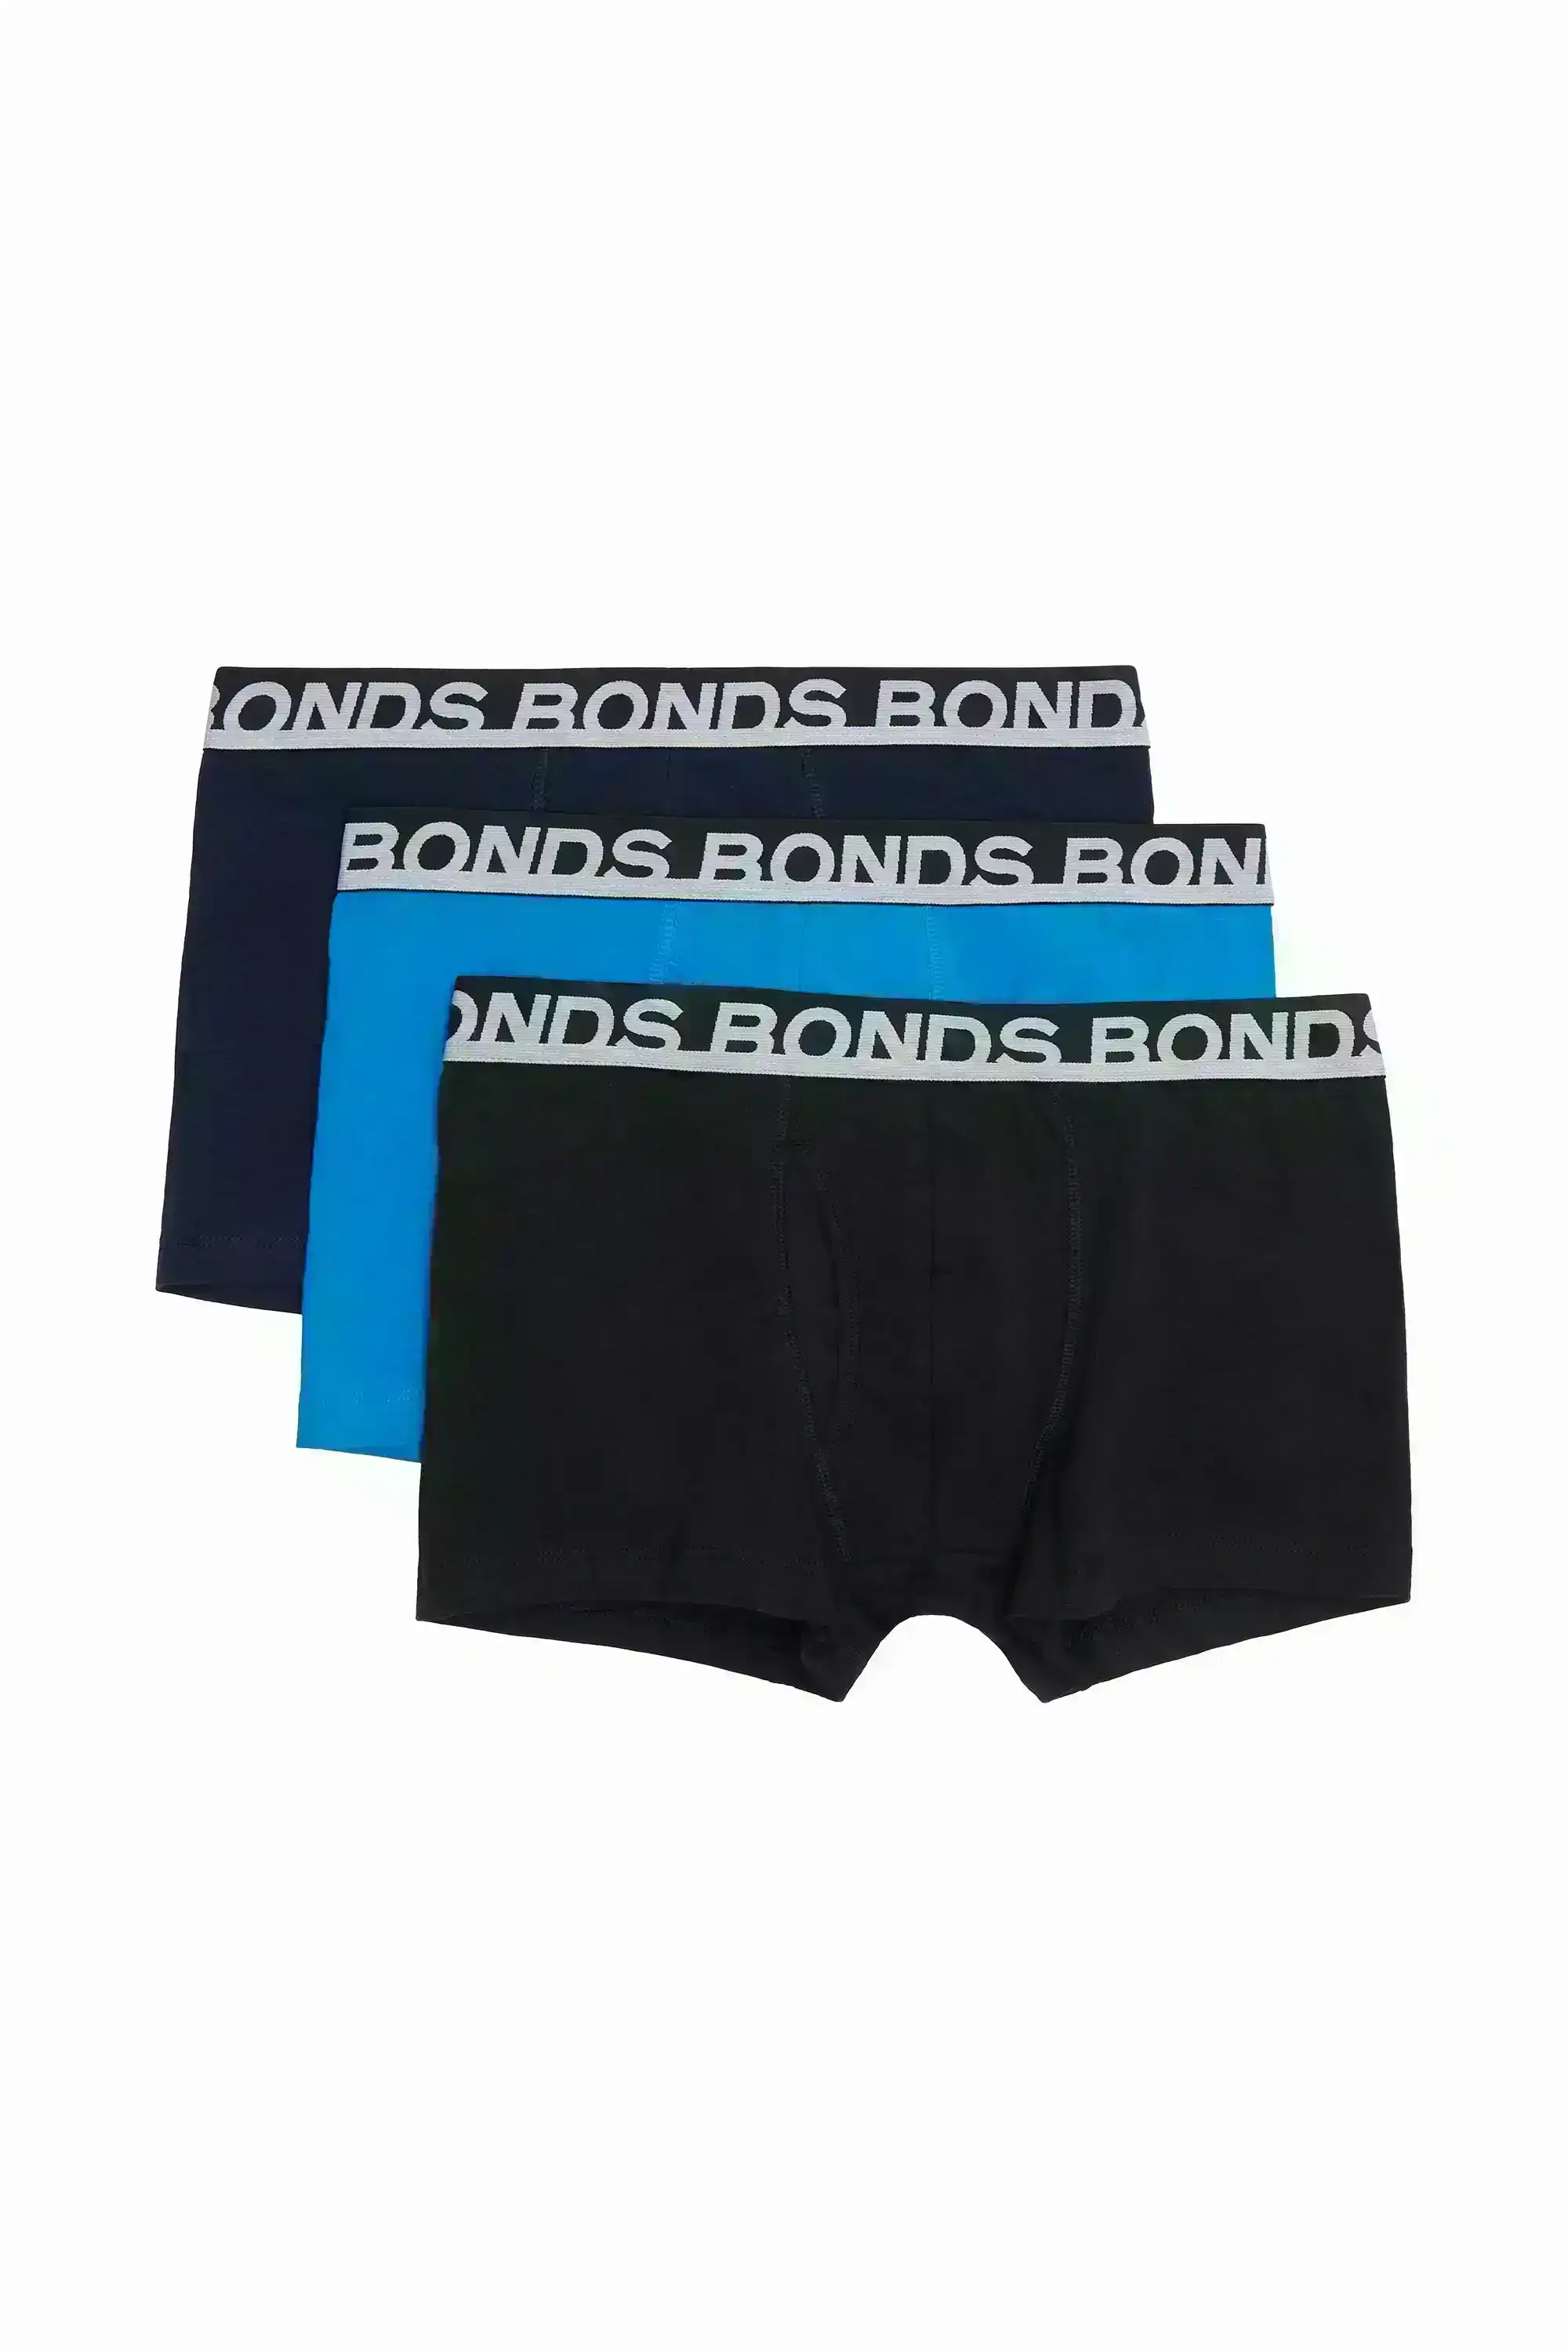 12 X Bonds Mens Everyday Trunks Underwear Black / Navy / Blue